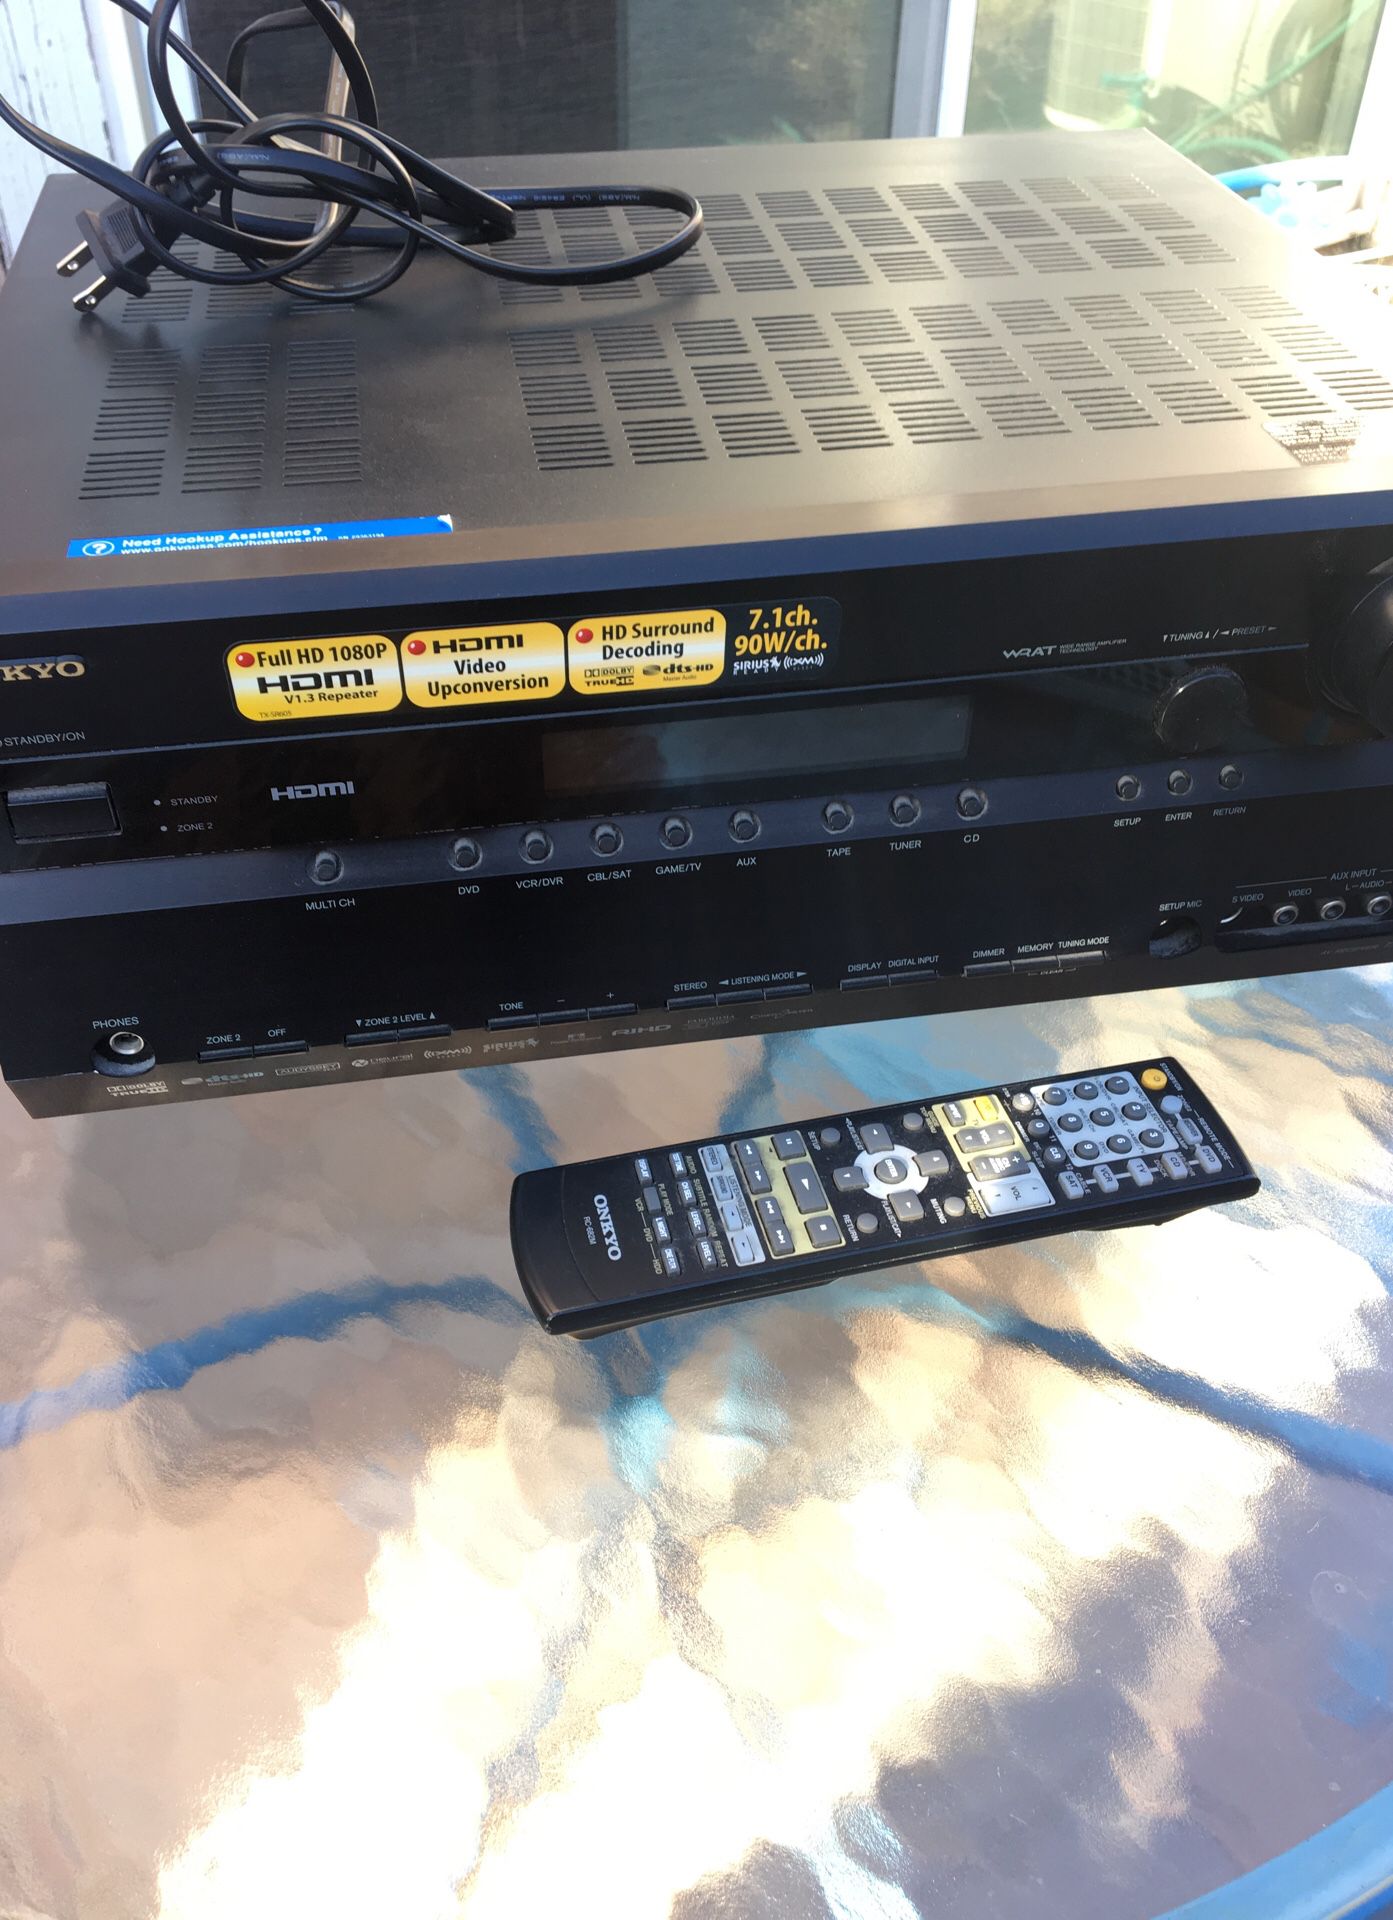 Onkyo TX-SR605B 7.1 Receiver with remote